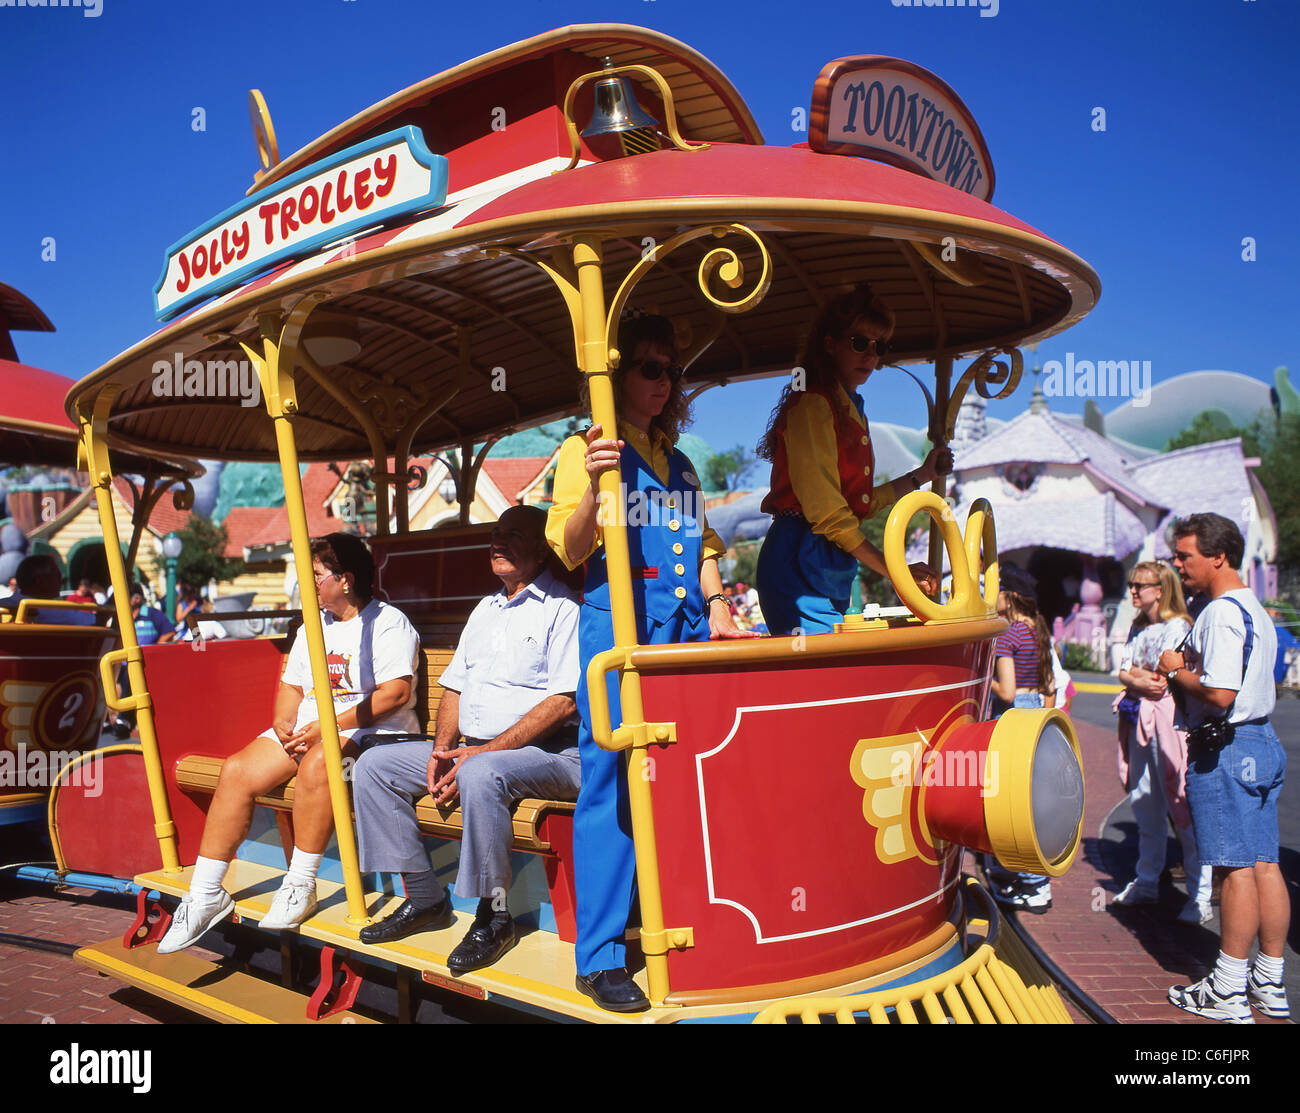 jolly-trolley-mickeys-toontown-disneyland-anaheim-california-united-C6FJPR.jpg